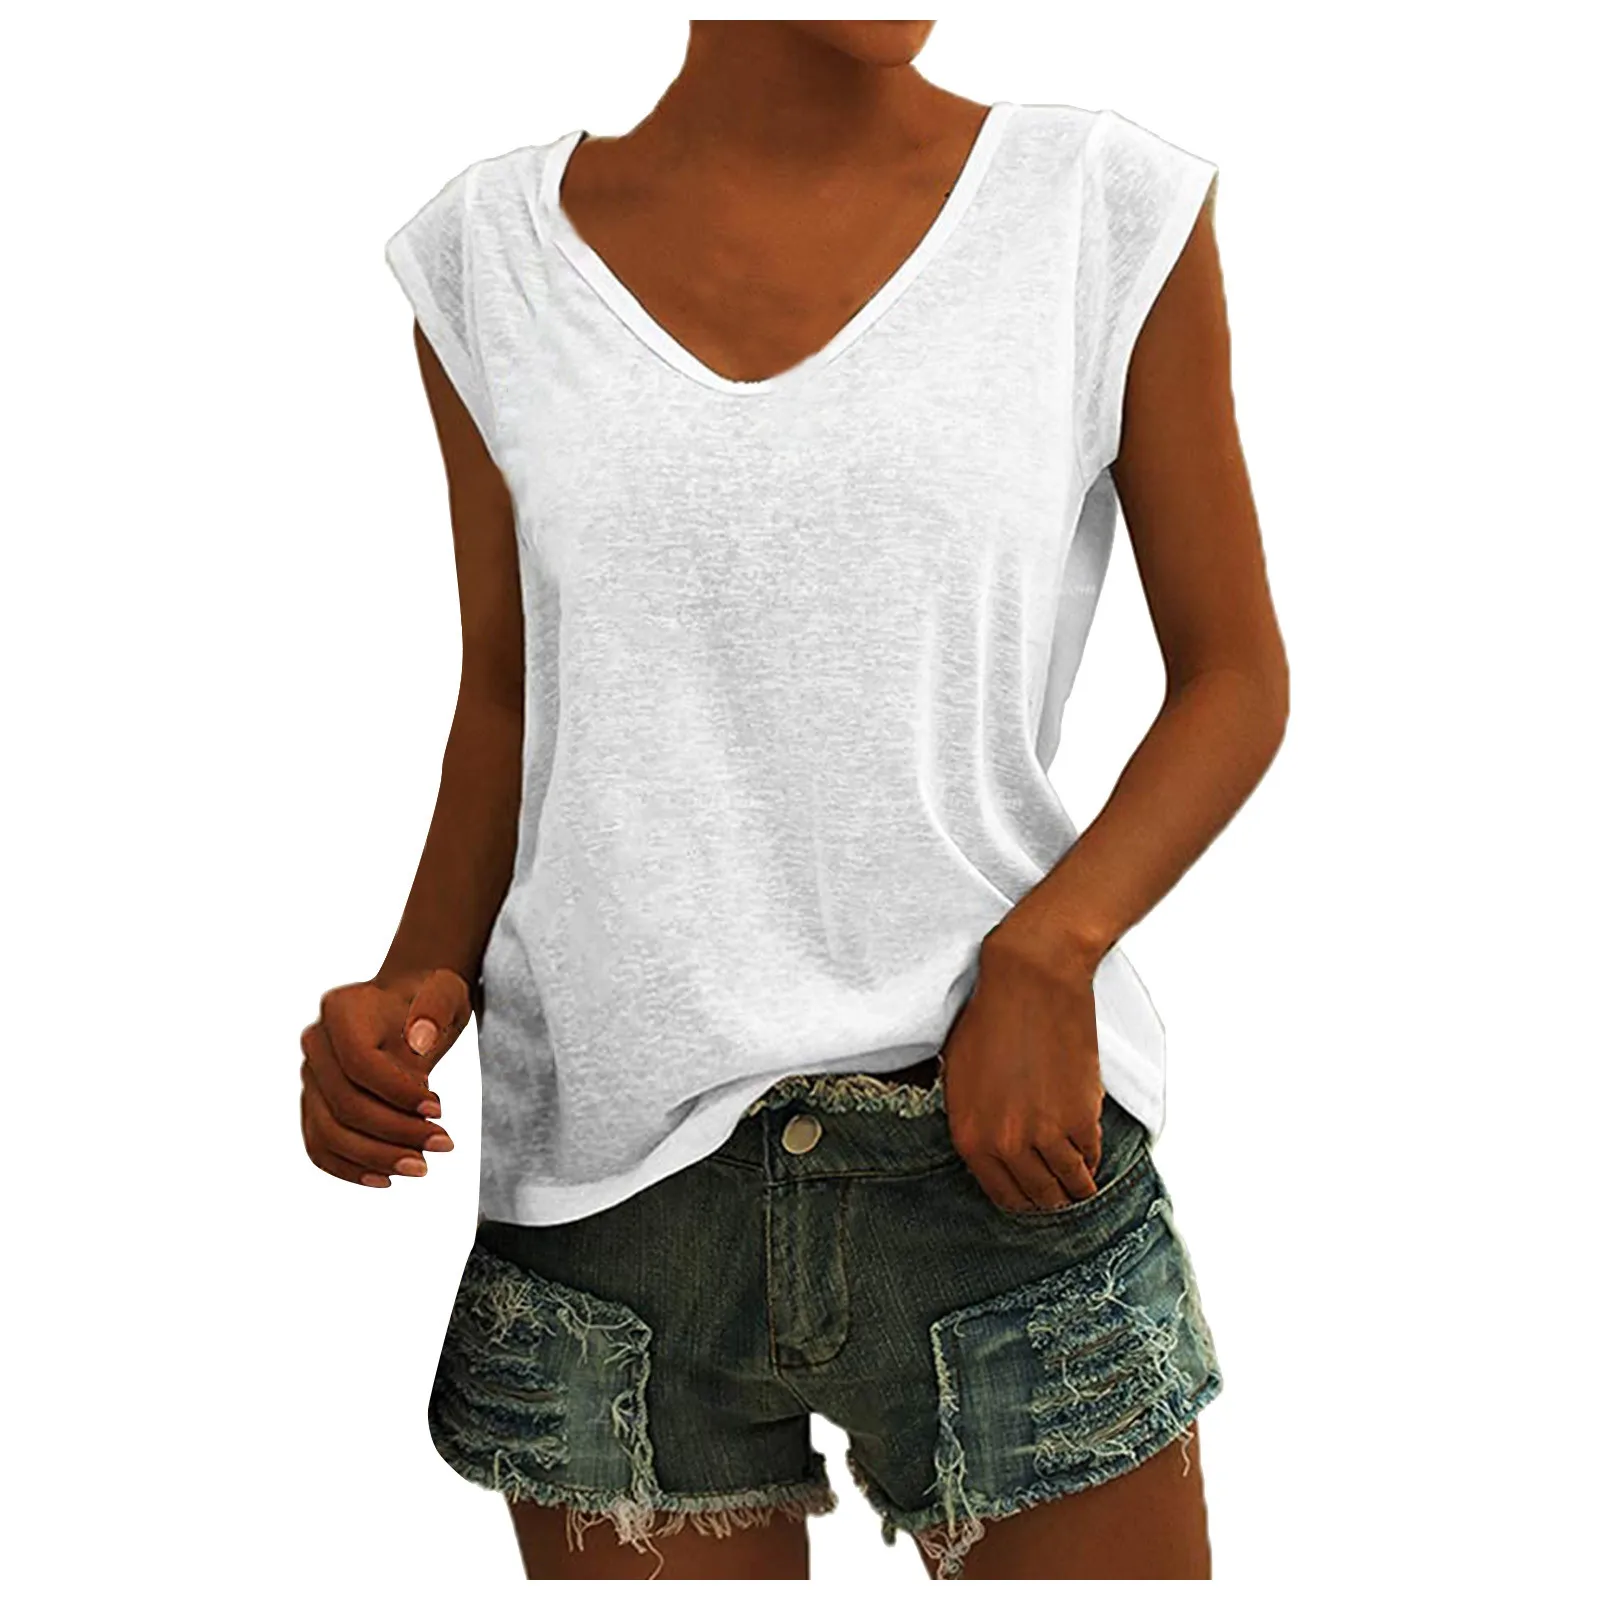 Camisola regata com decote em v feminina, camiseta casual, colete de manga, blusa monocromática solta, fit fit, tops femininos